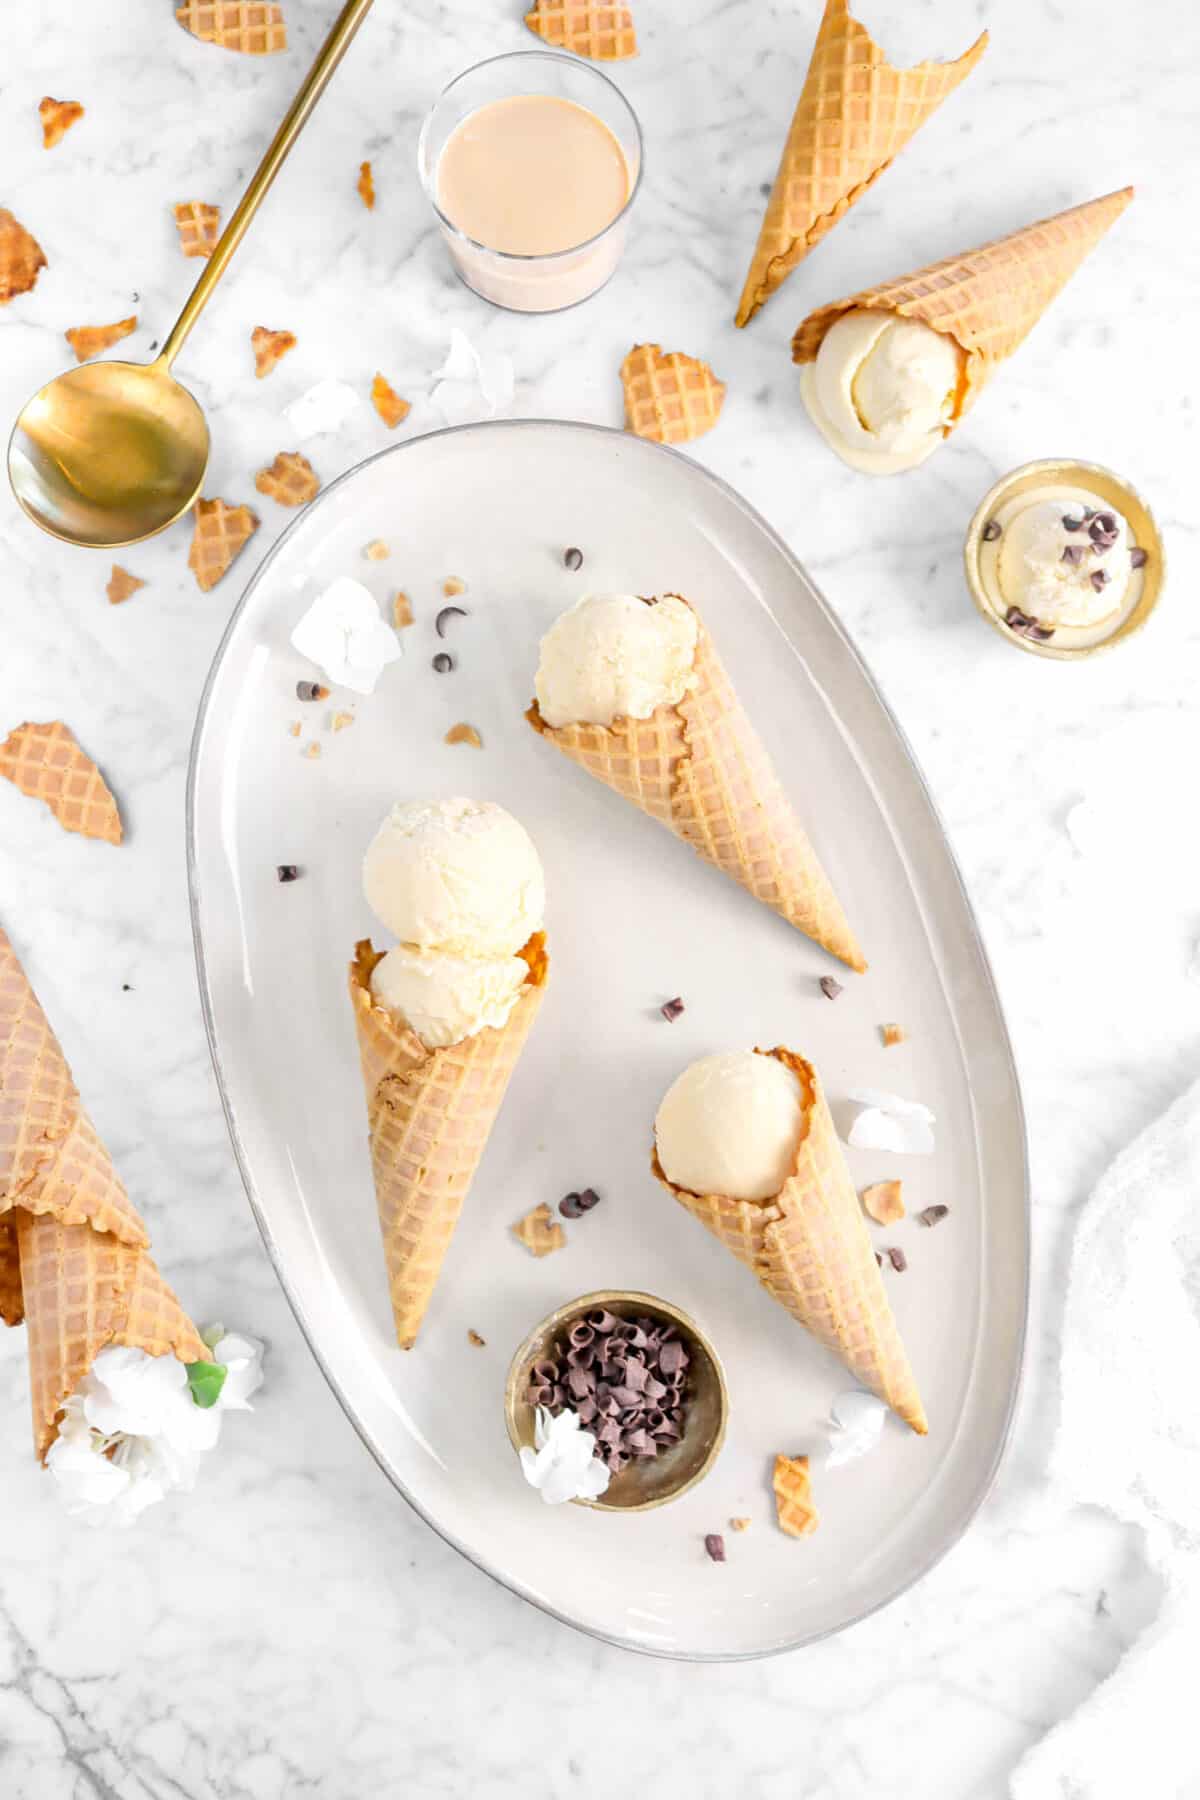 three cones of irish cream ice cream on server with cones around, chocolate curls, gold spoon, and gold bowl of ice cream